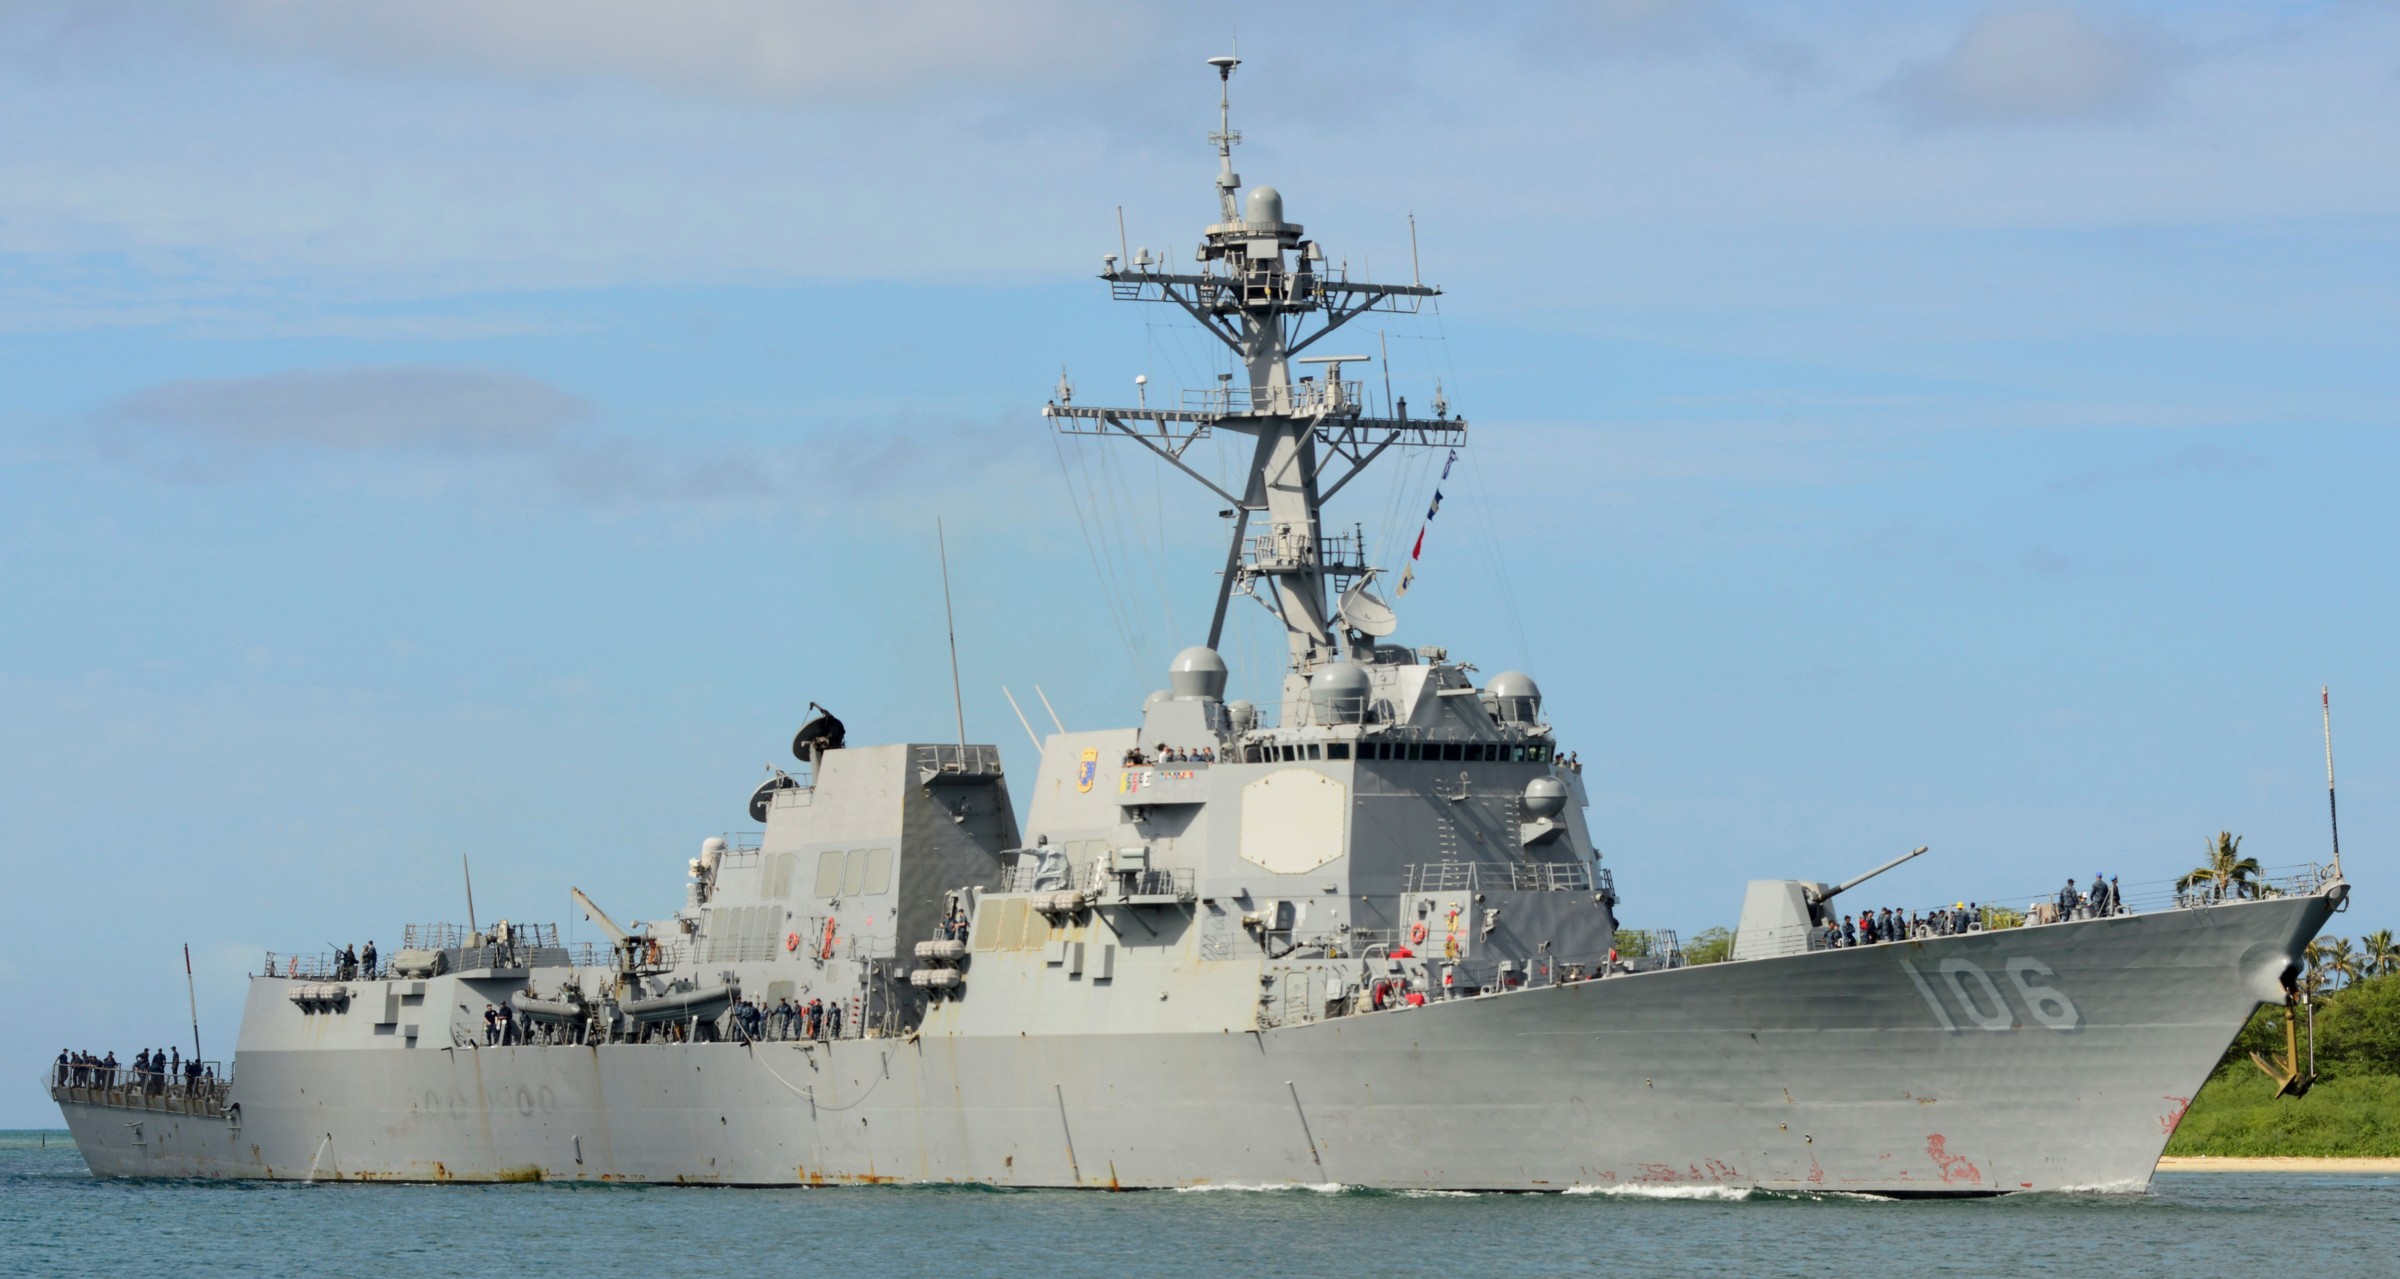 ddg-106 uss stockdale arleigh burke class guided missile destroyer aegis us navy pearl harbor hickam hawaii rimpac 06